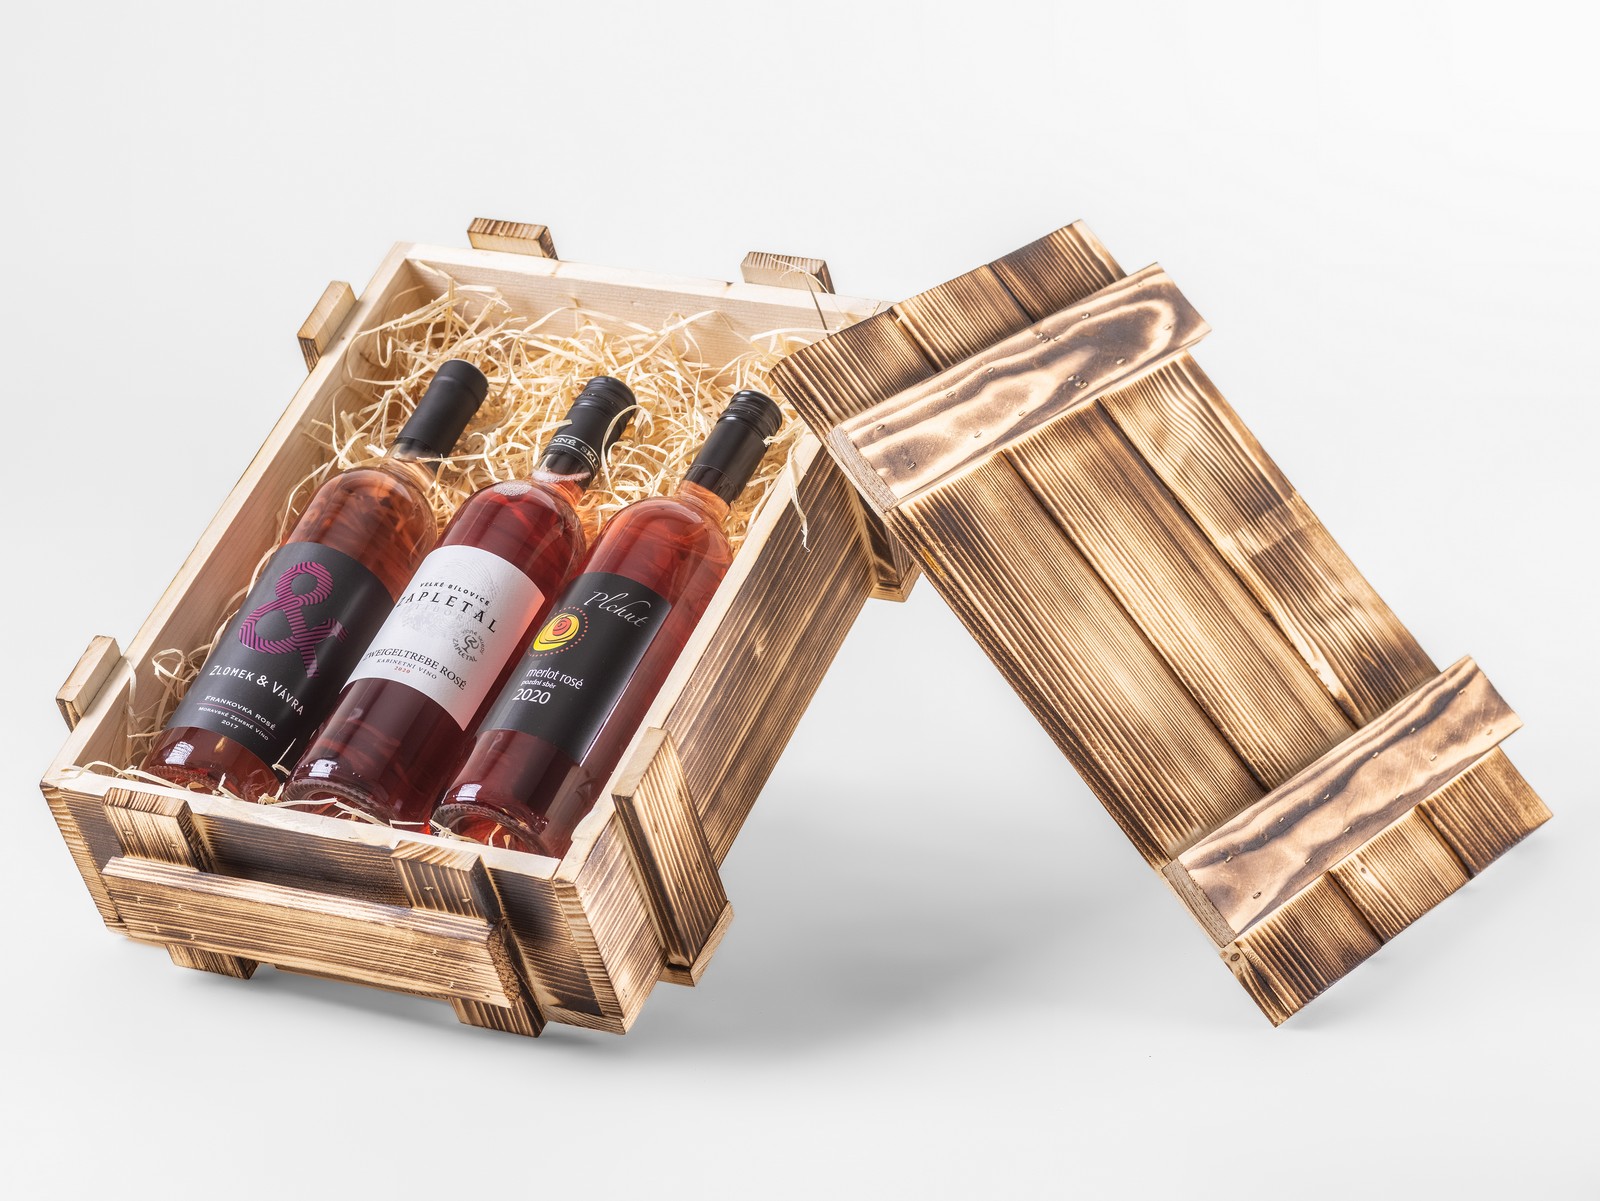 Vinotéka u Paulího Dárkový box s výběrem růžových vín Zlomek a Vávra, Zapletal Tibor a Plchut